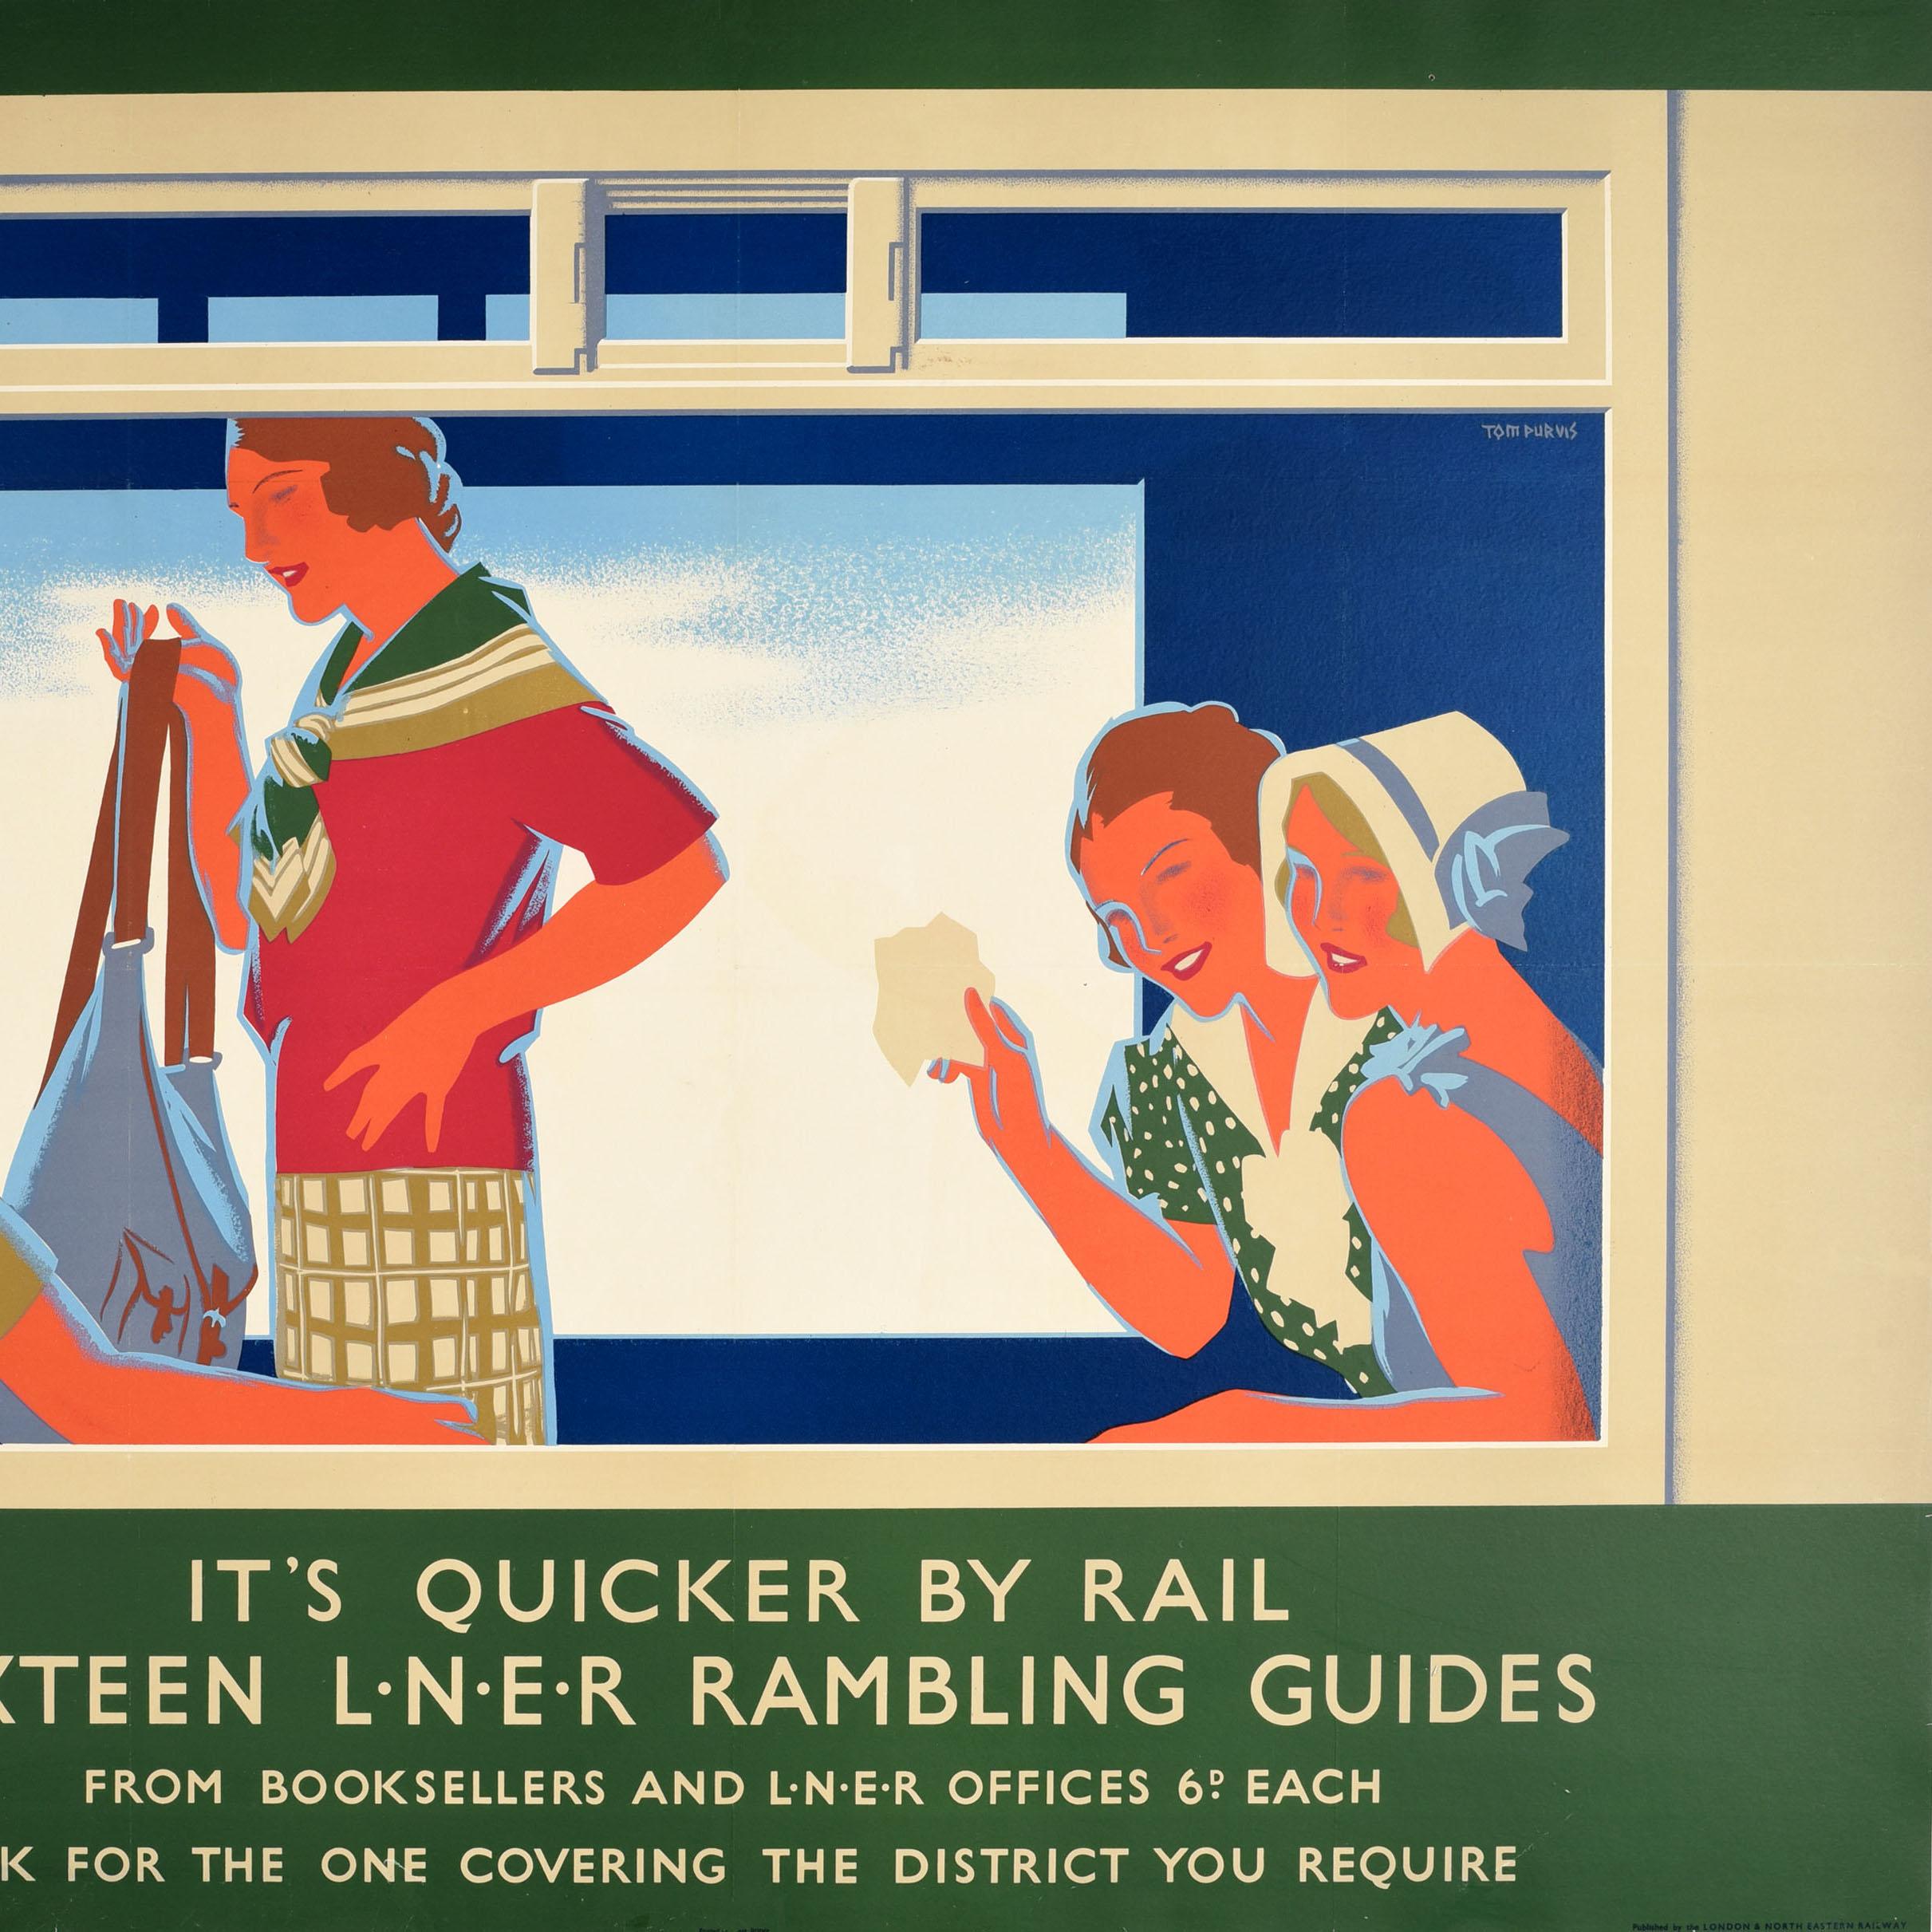 British Original Vintage Travel Advertising Poster LNER Rambling Guides Tom Purvis Art For Sale